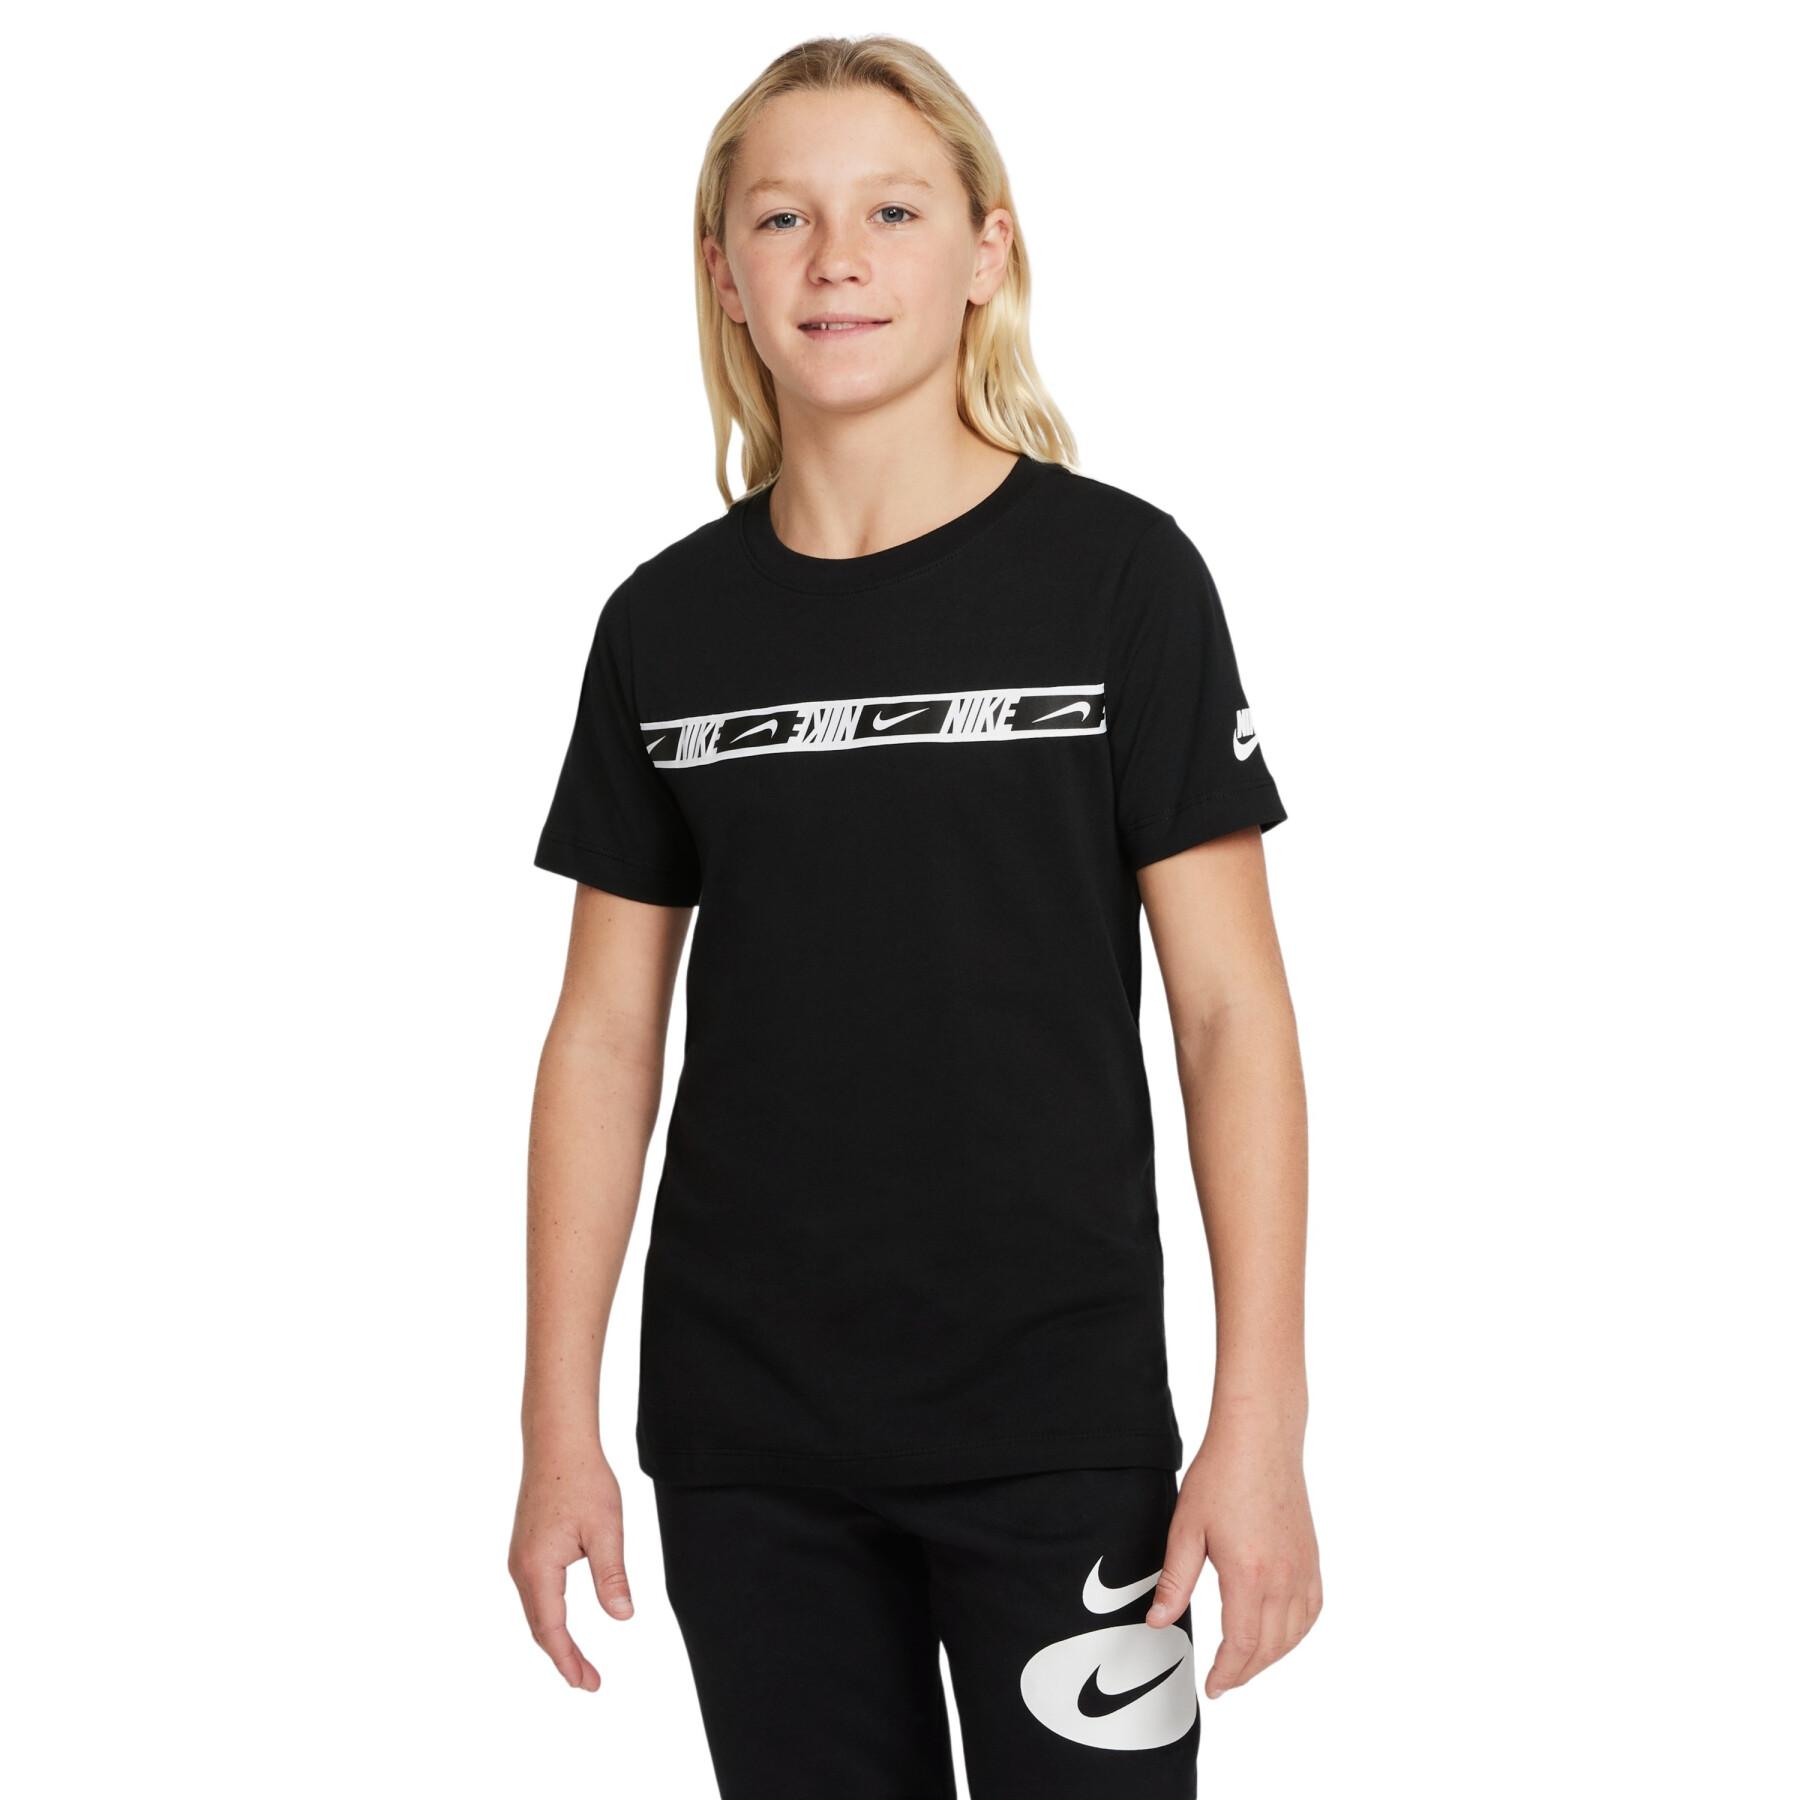 Child's T-shirt Nike Repeat